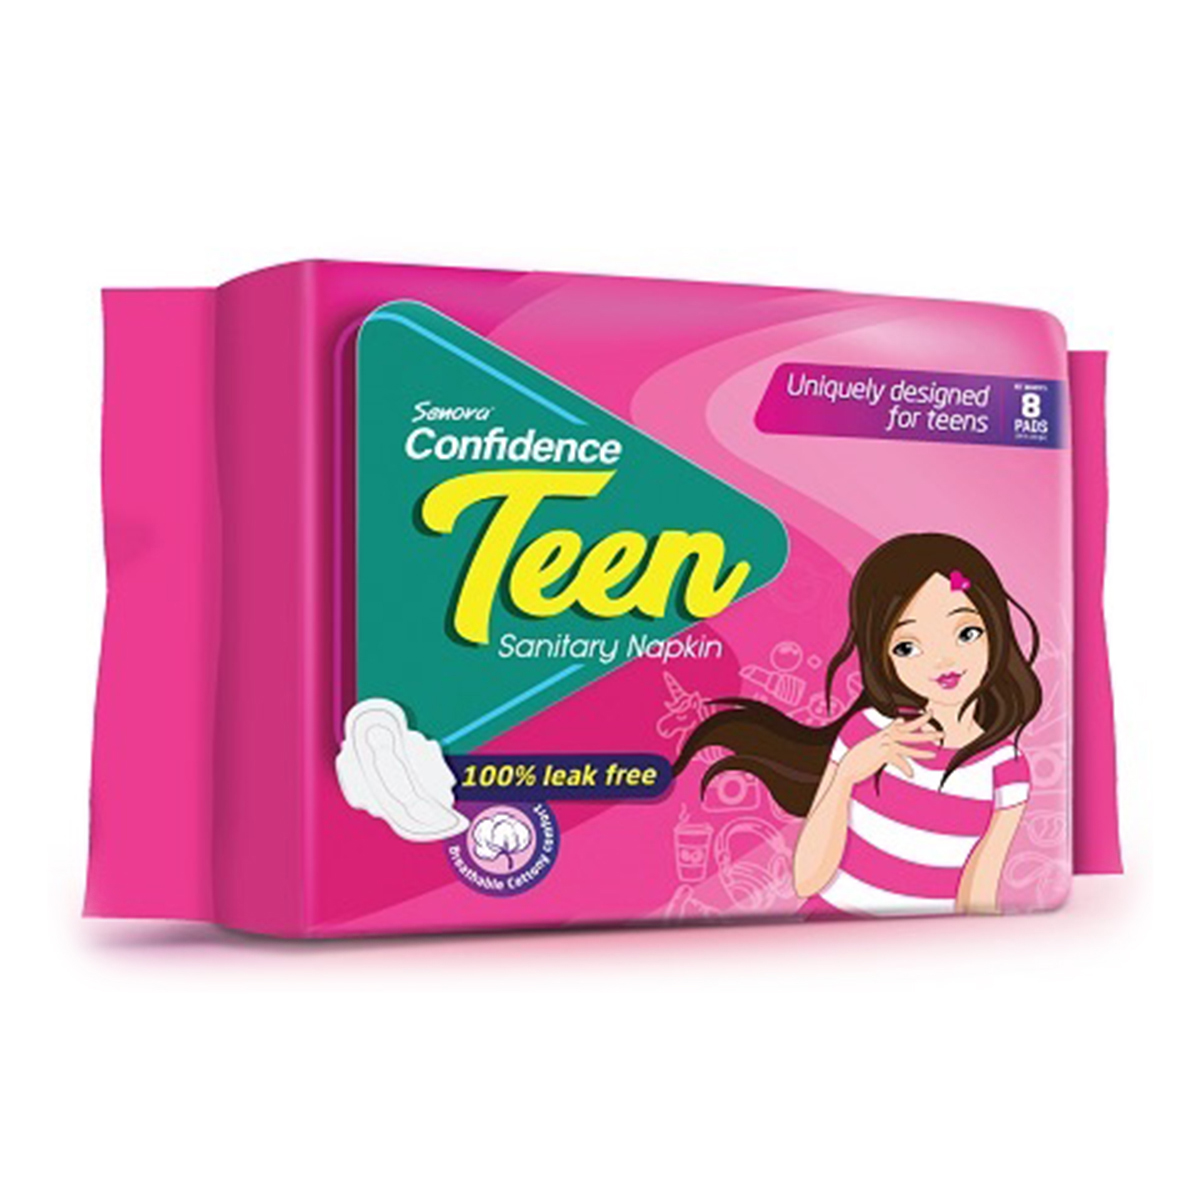 Senora Confidence Teen Sanitary Napkin - 8 pads - pad